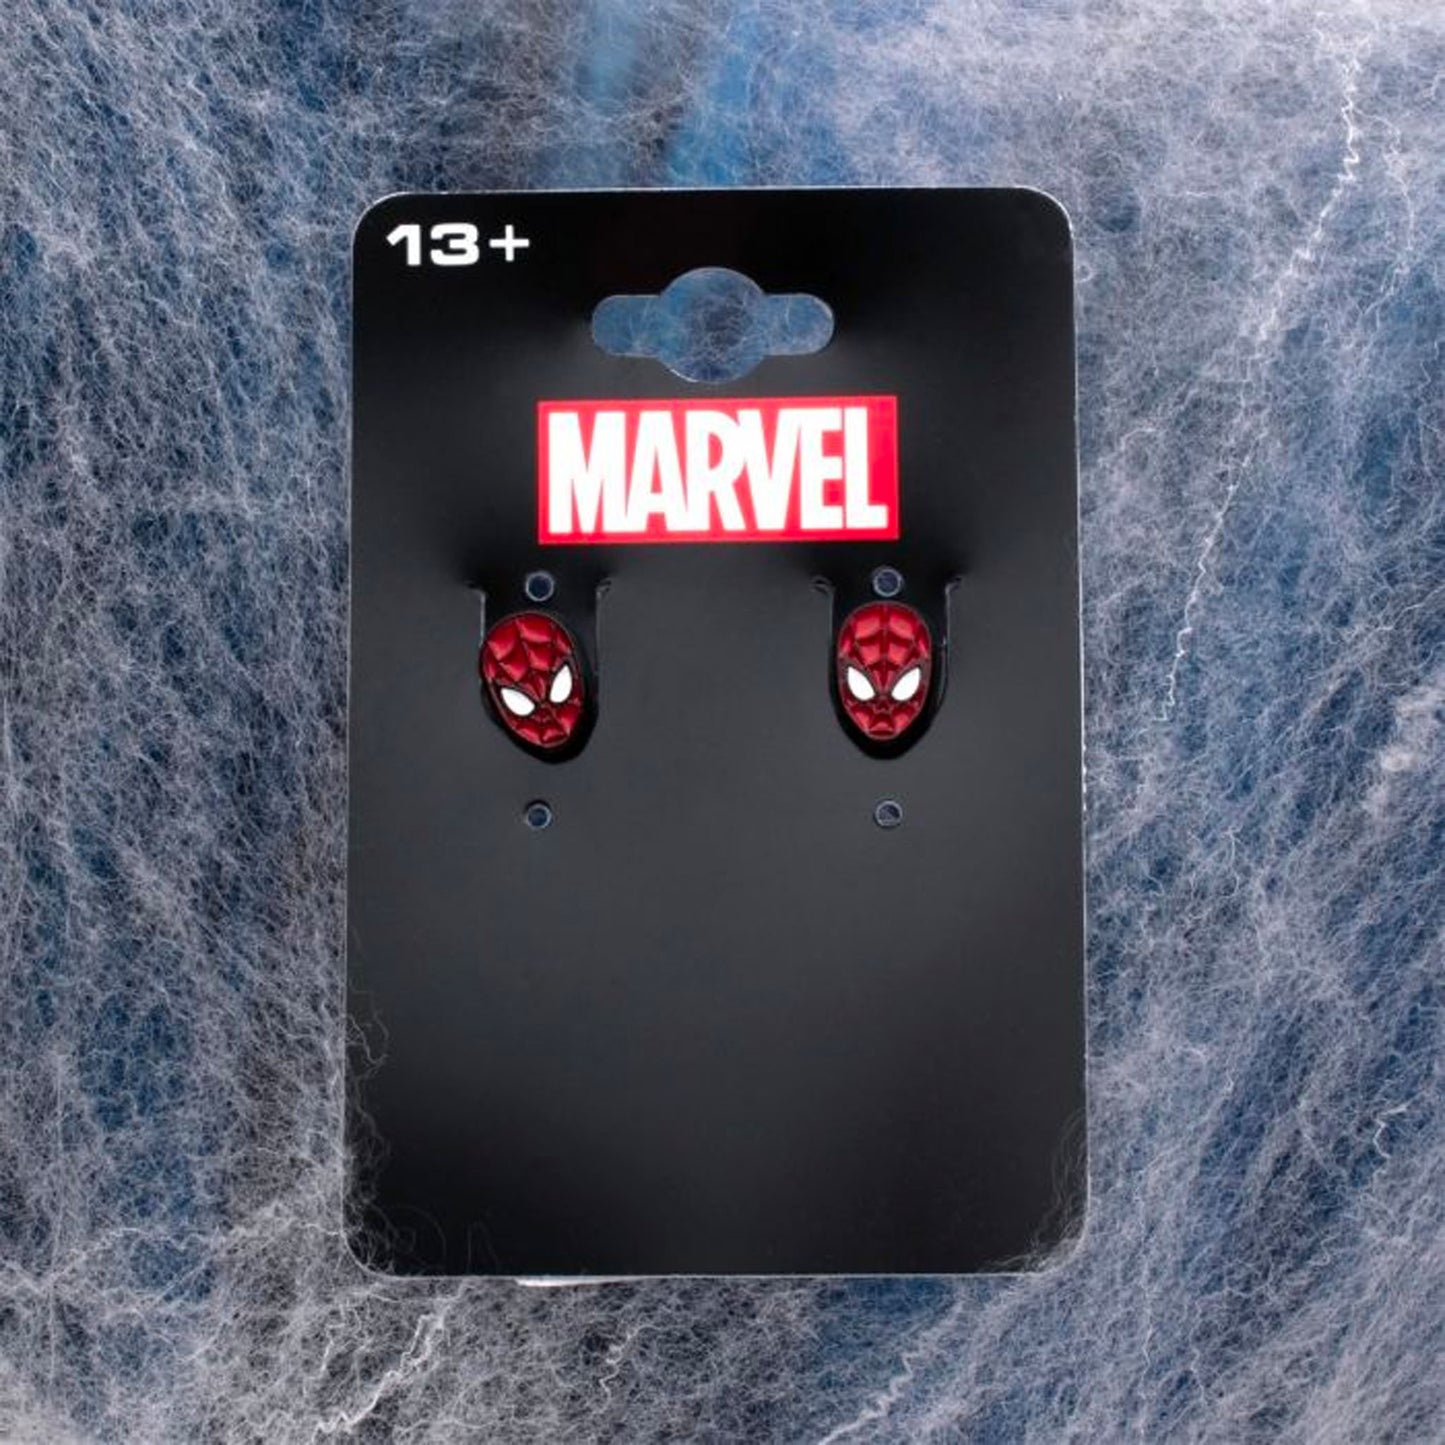 Load image into Gallery viewer, Spider-Man (Marvel) Enamel Stud Earrings
